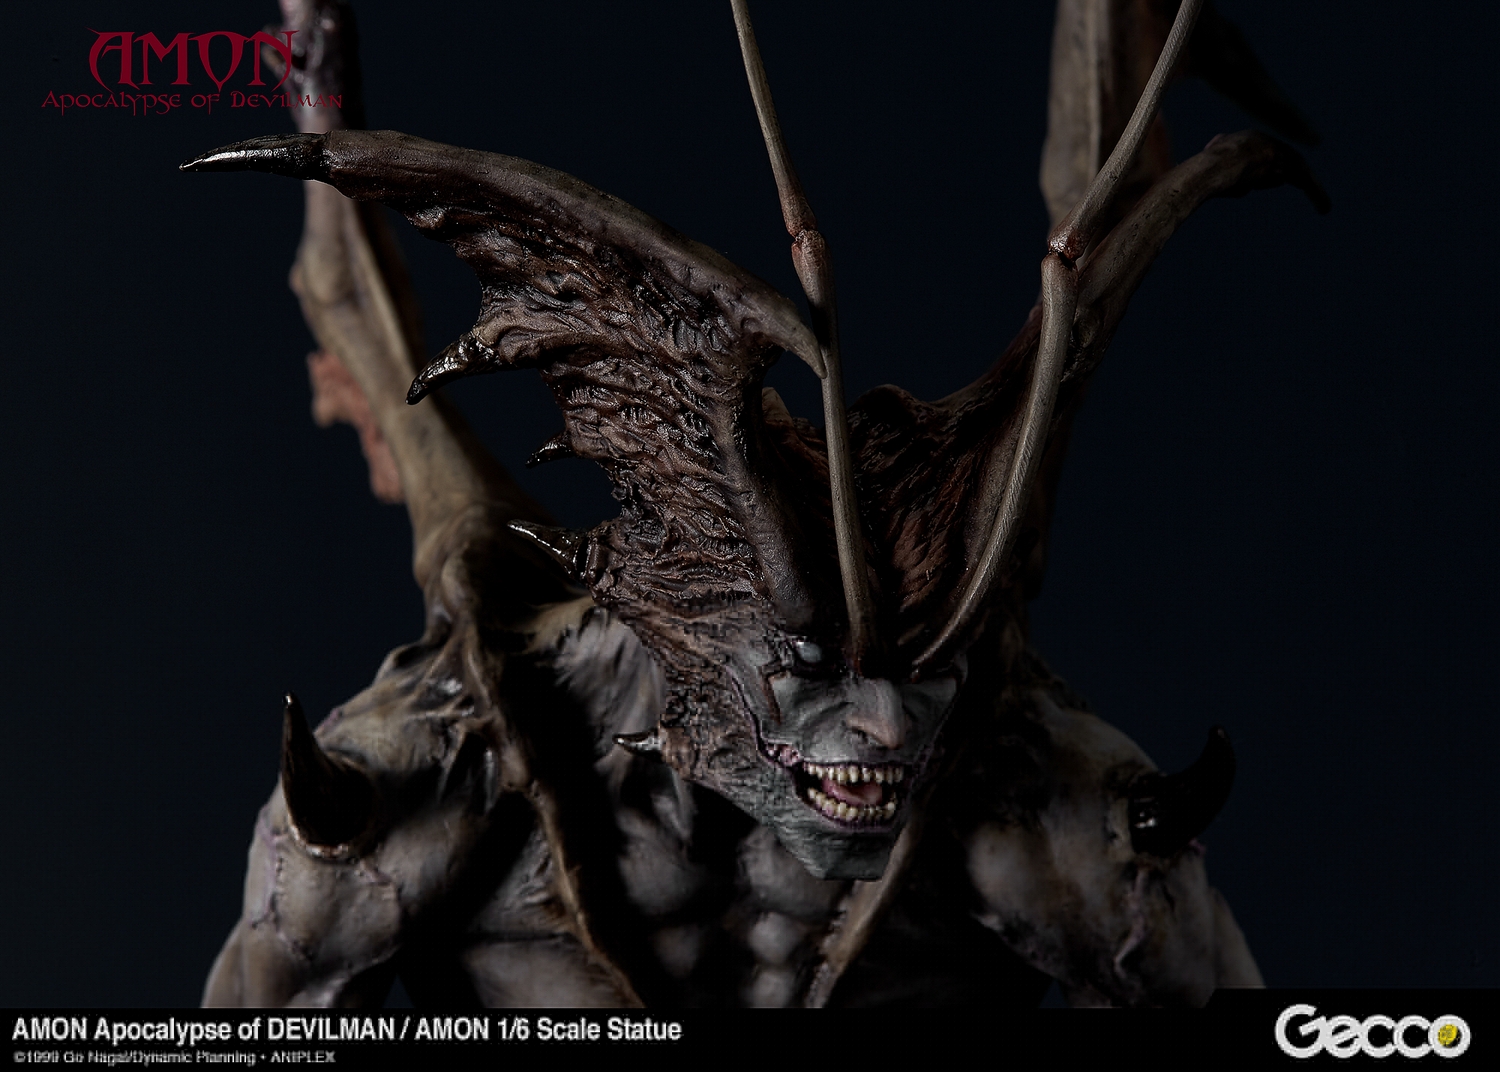 Gecco-Amon-Apocalypse-of-Devilman-Statue-018.jpg